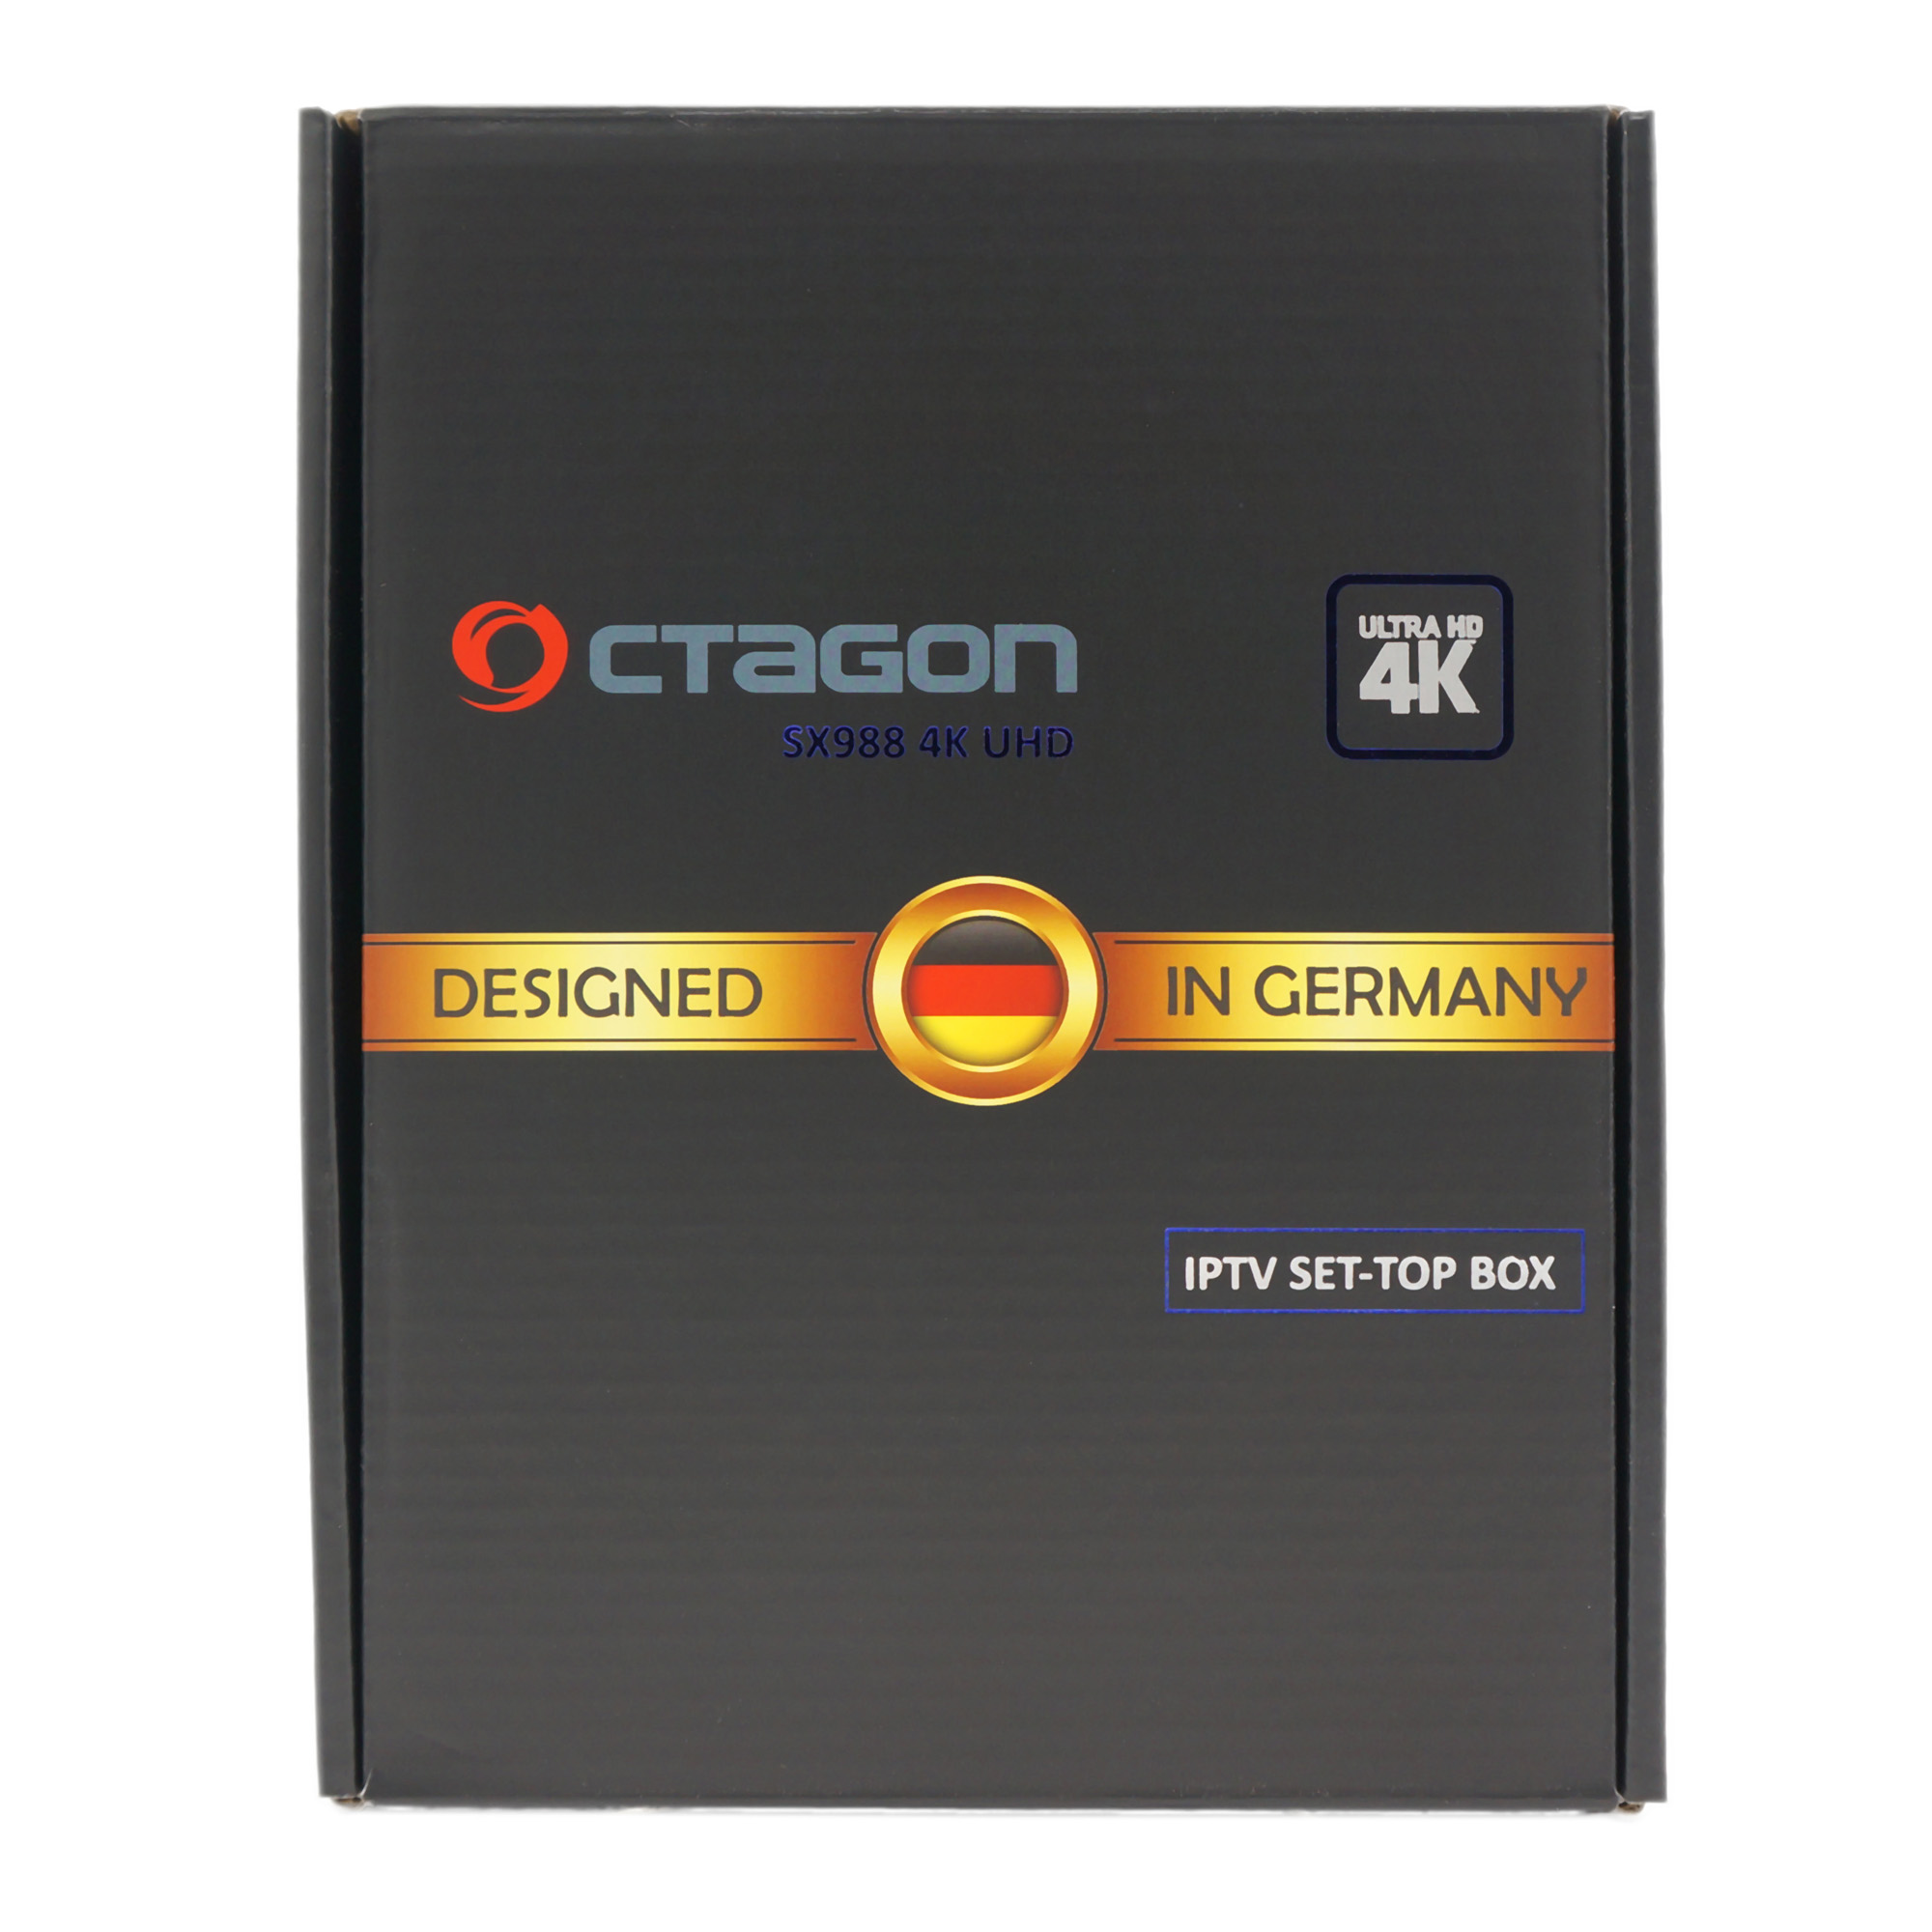 OCTAGON SX988 IP 600 8 Wifi Mbit/s GB